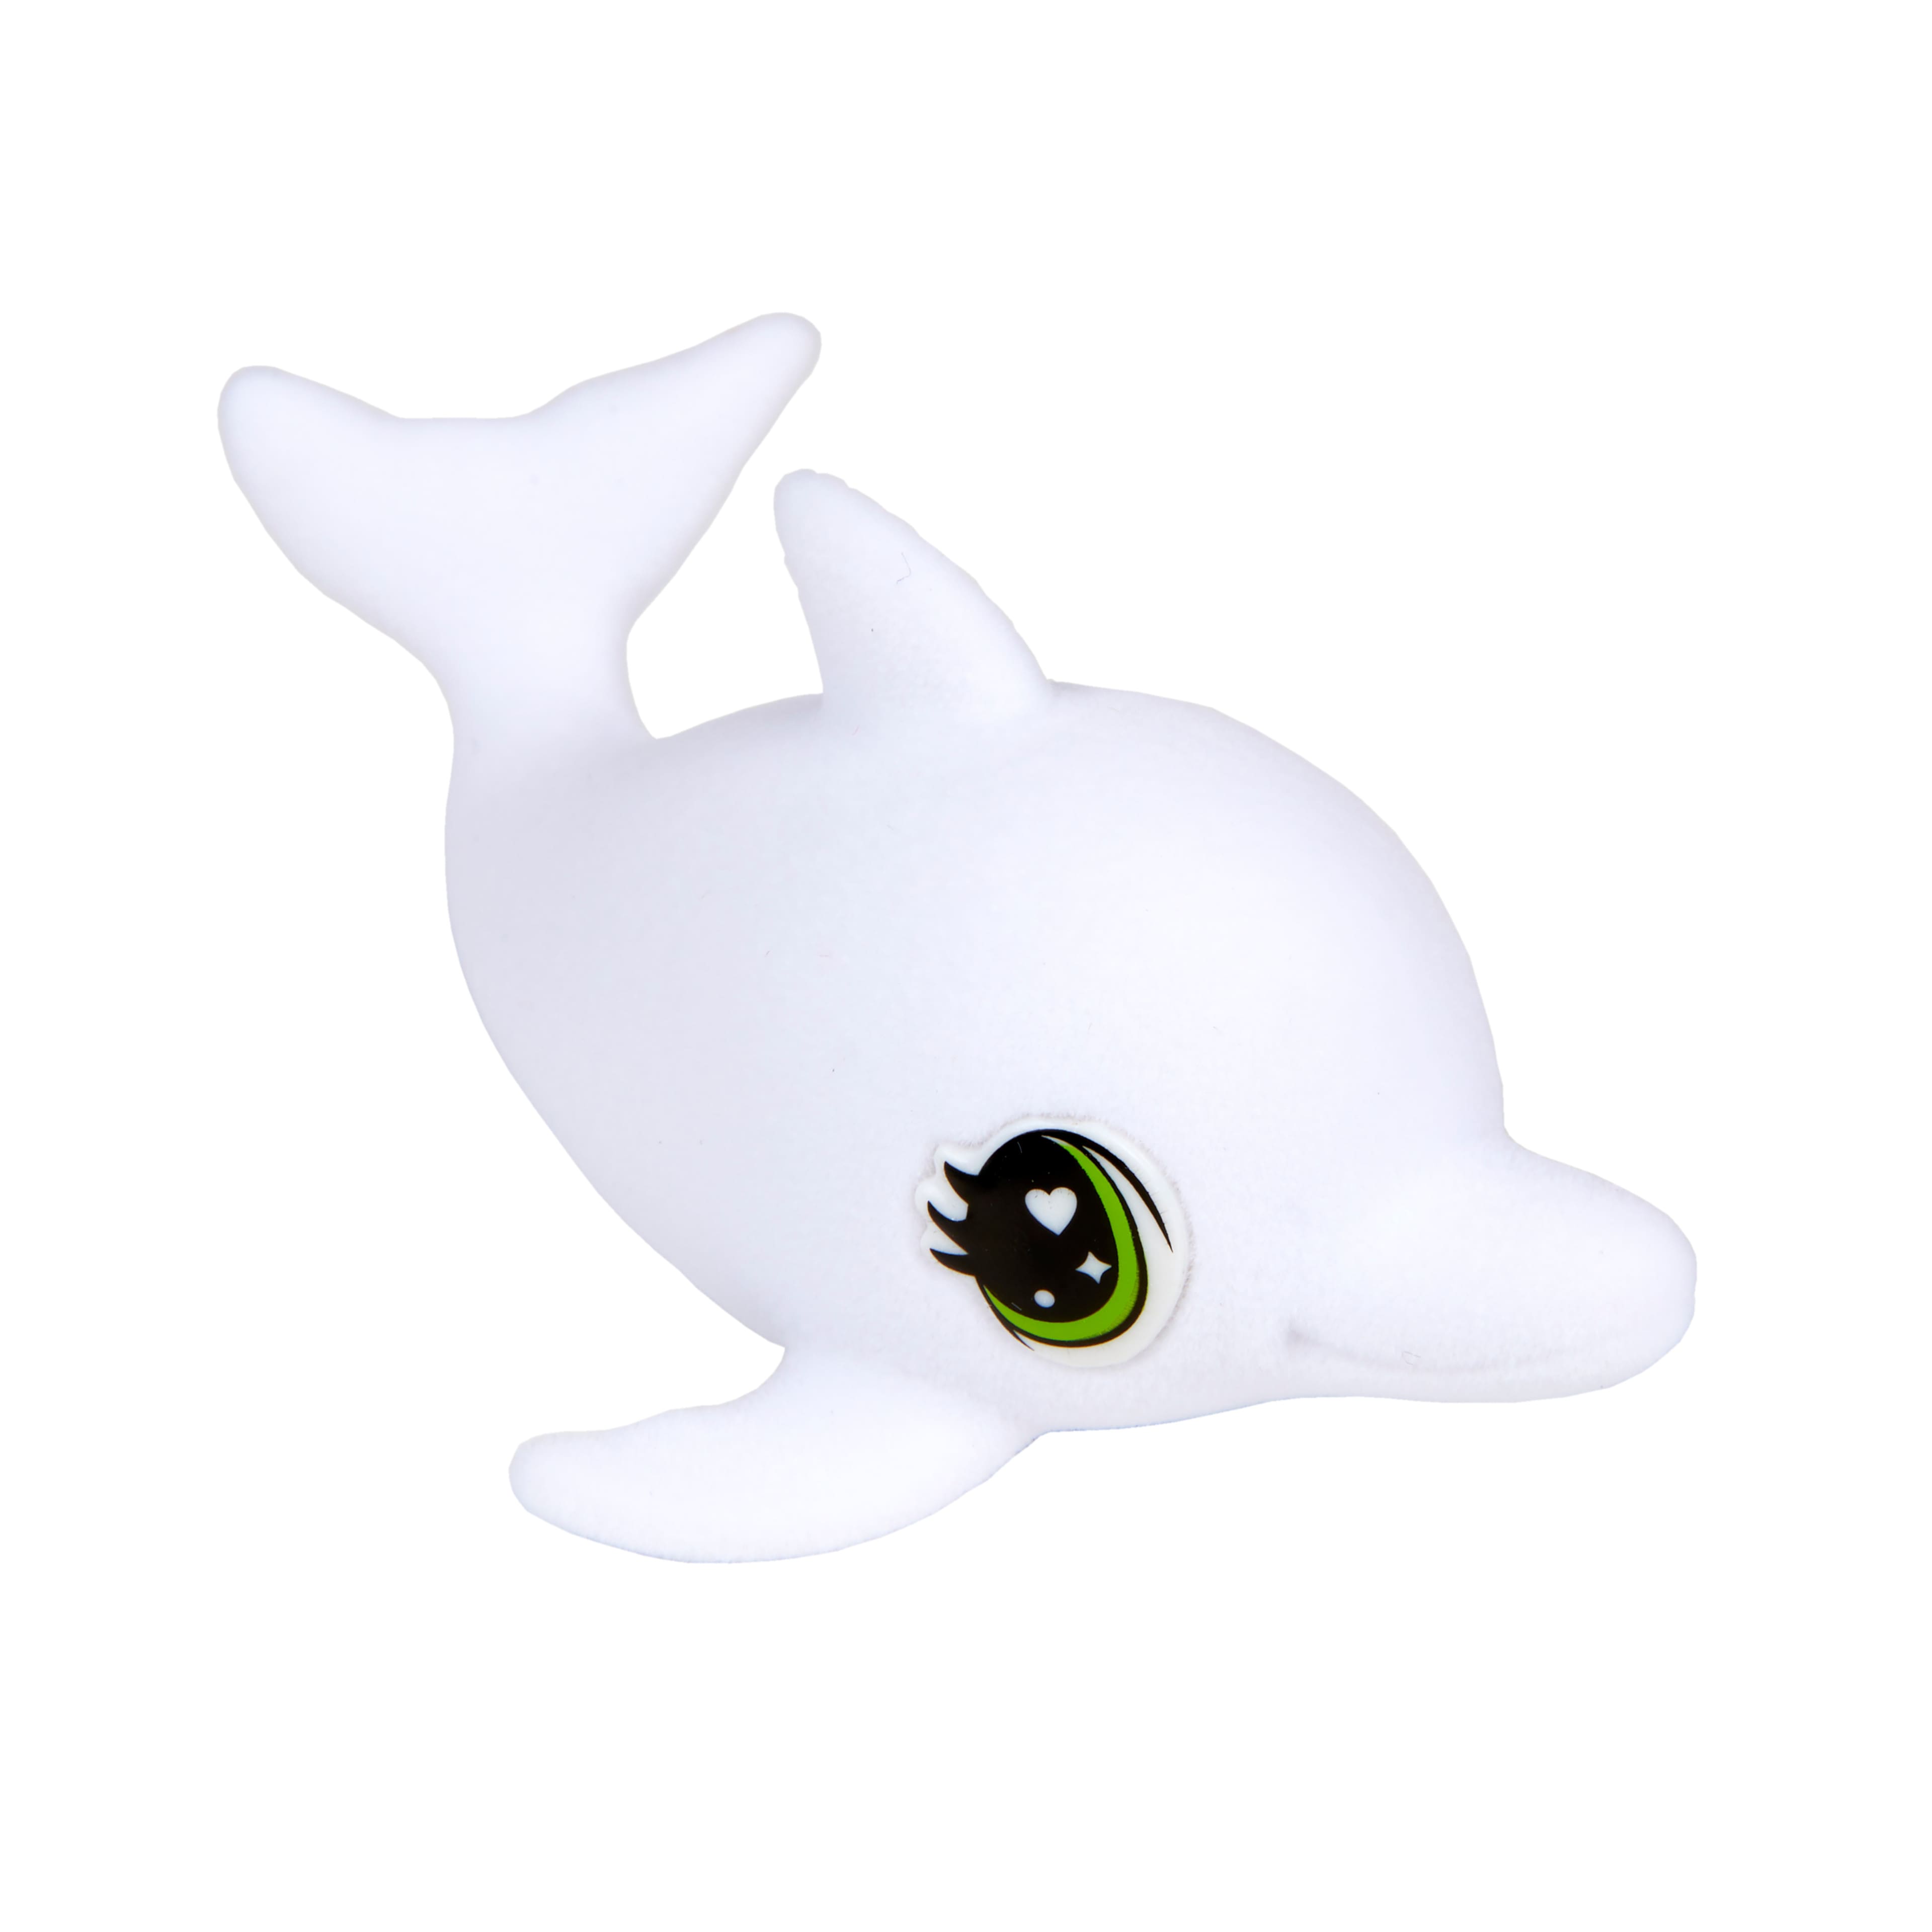 12 Pack: Assorted Scribble Scrubbie&#xAE; Ocean Pets Washable Pet Figurine